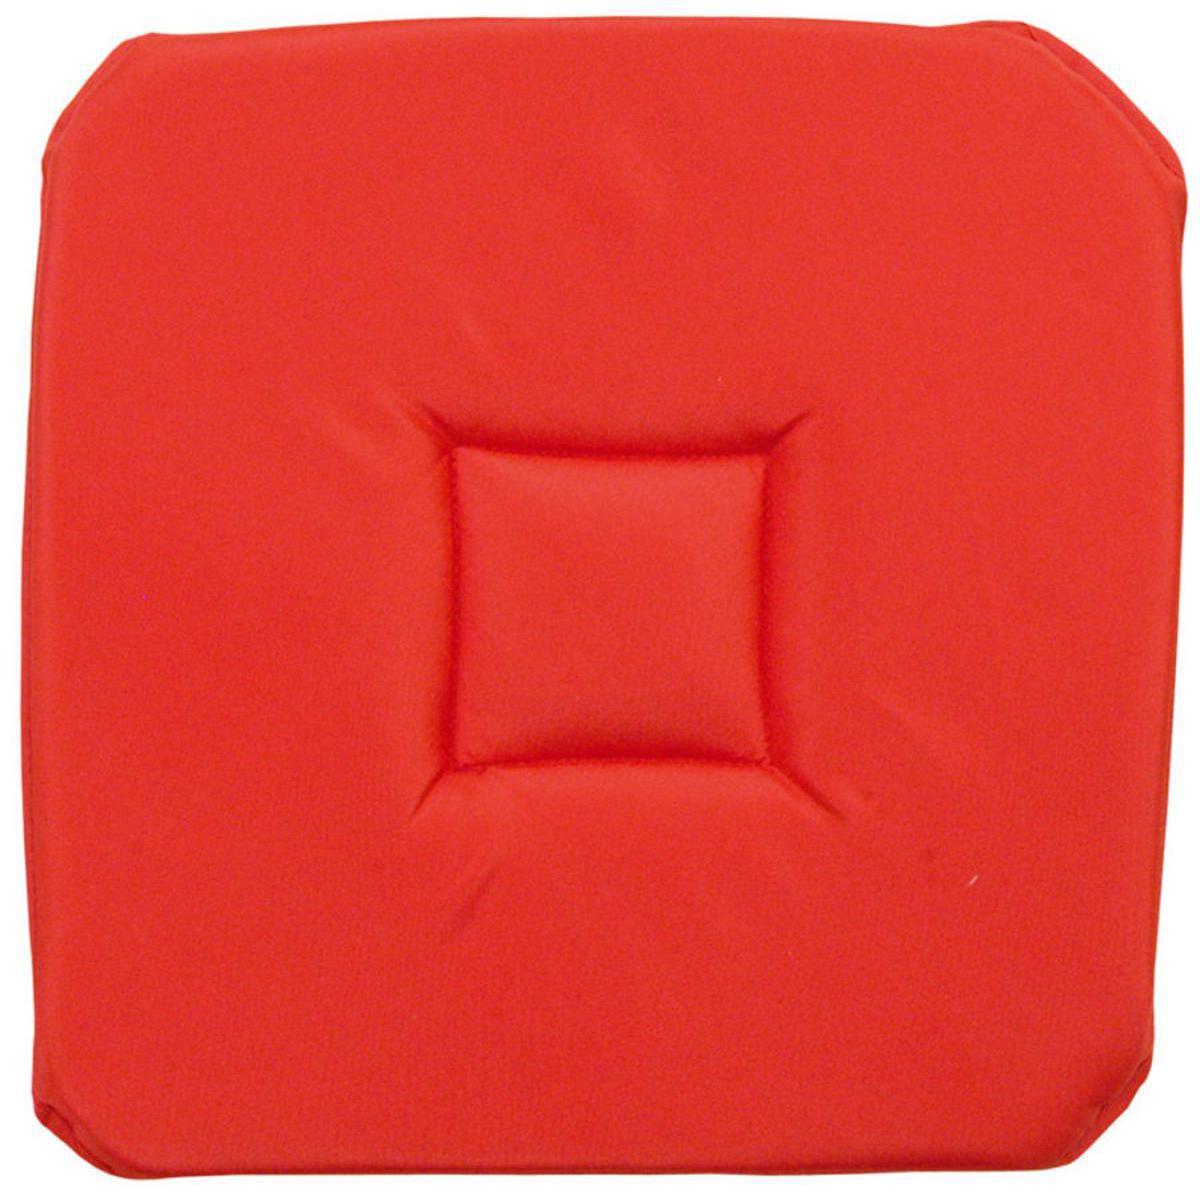 Galette de chaise - Polyester - 36 x 36 cm - Rouge